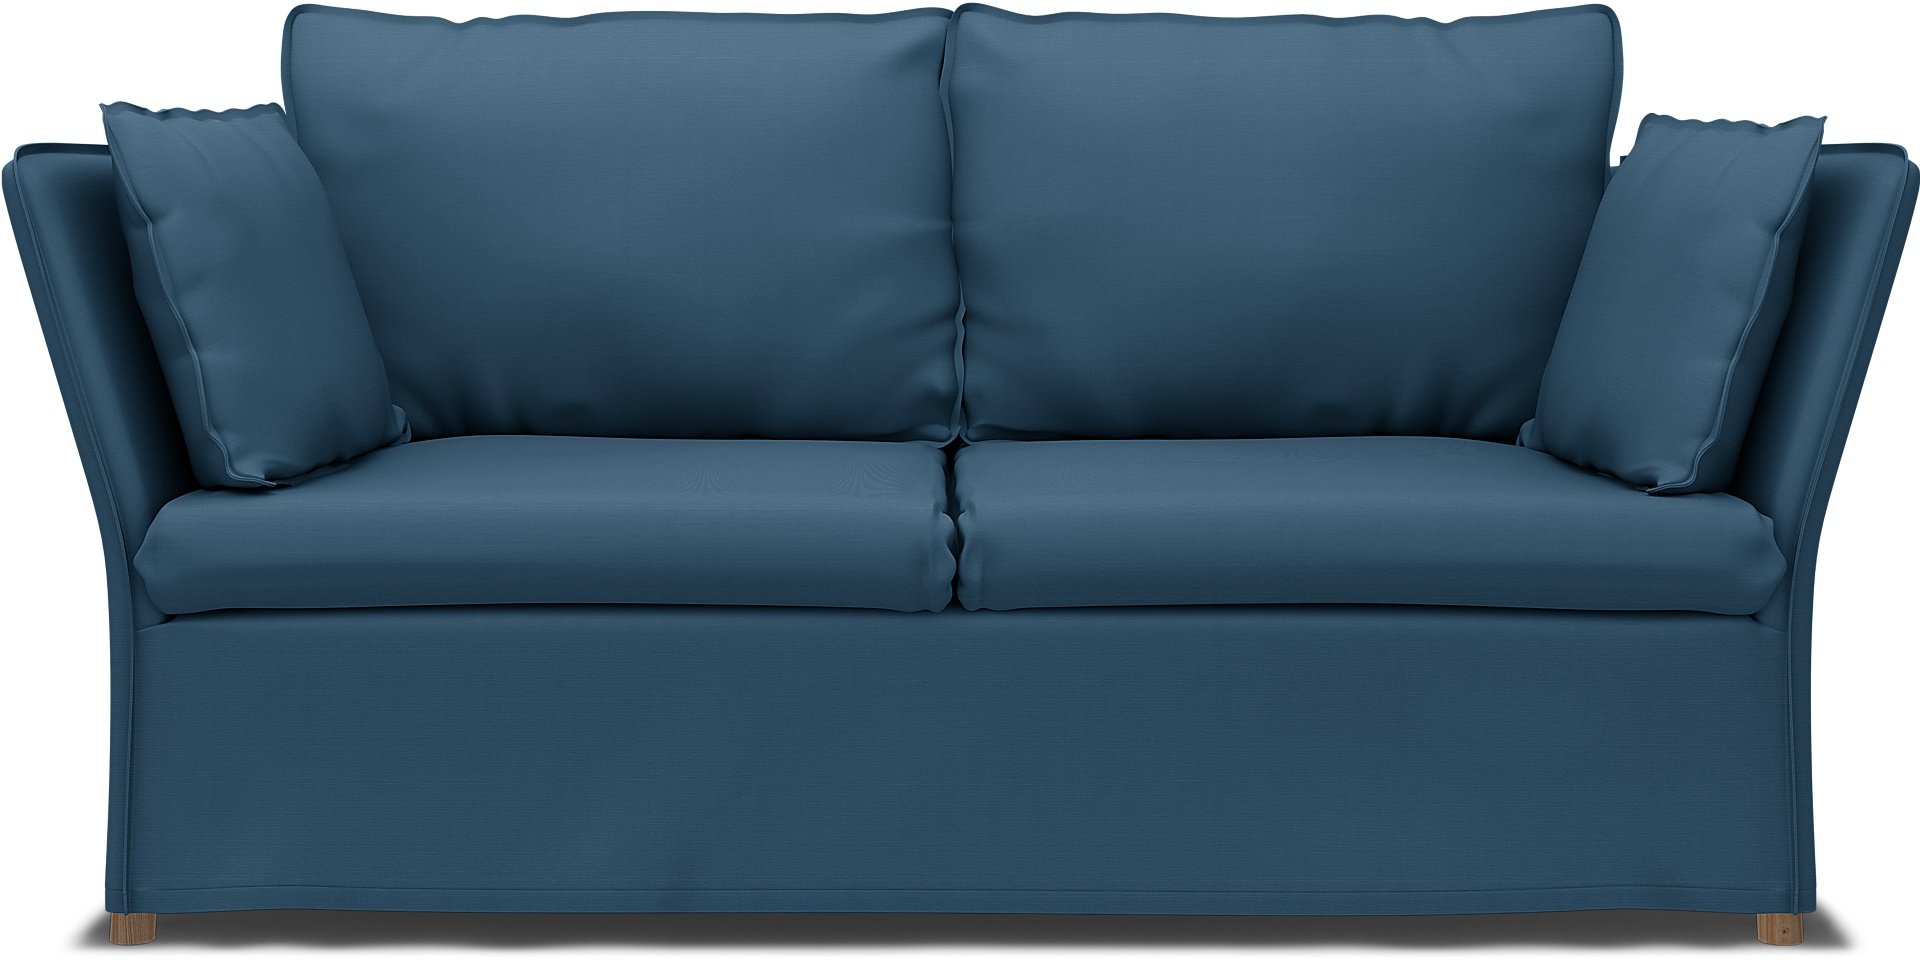 IKEA - Backsalen 2 seater sofa, Real Teal, Cotton - Bemz